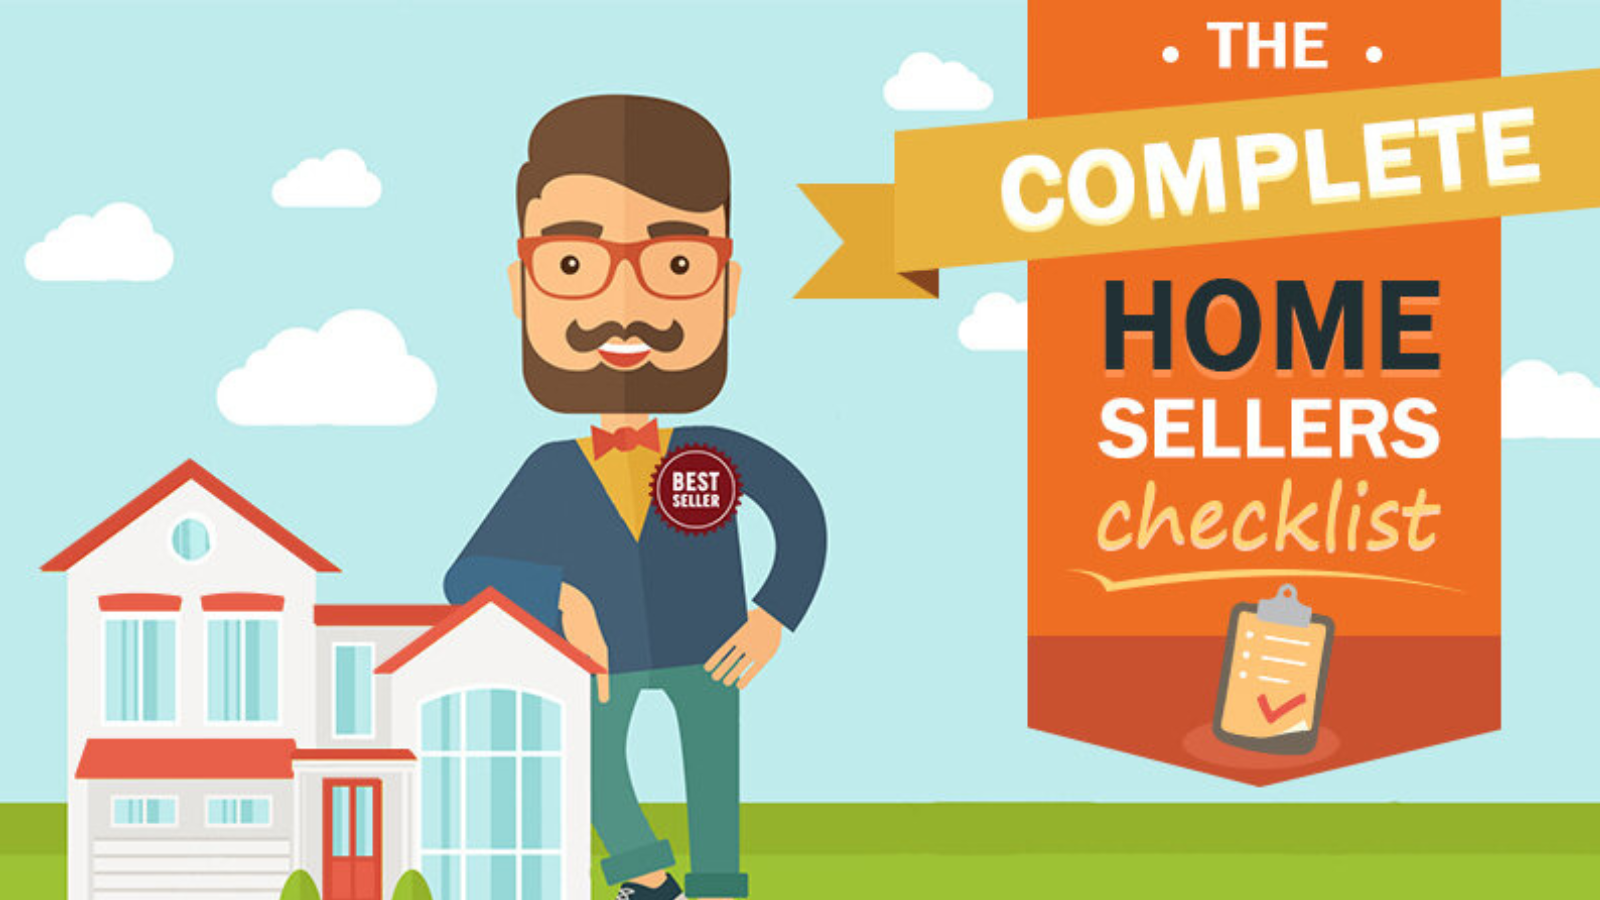 The Complete Home Sellers Checklist (Interior Preparation)